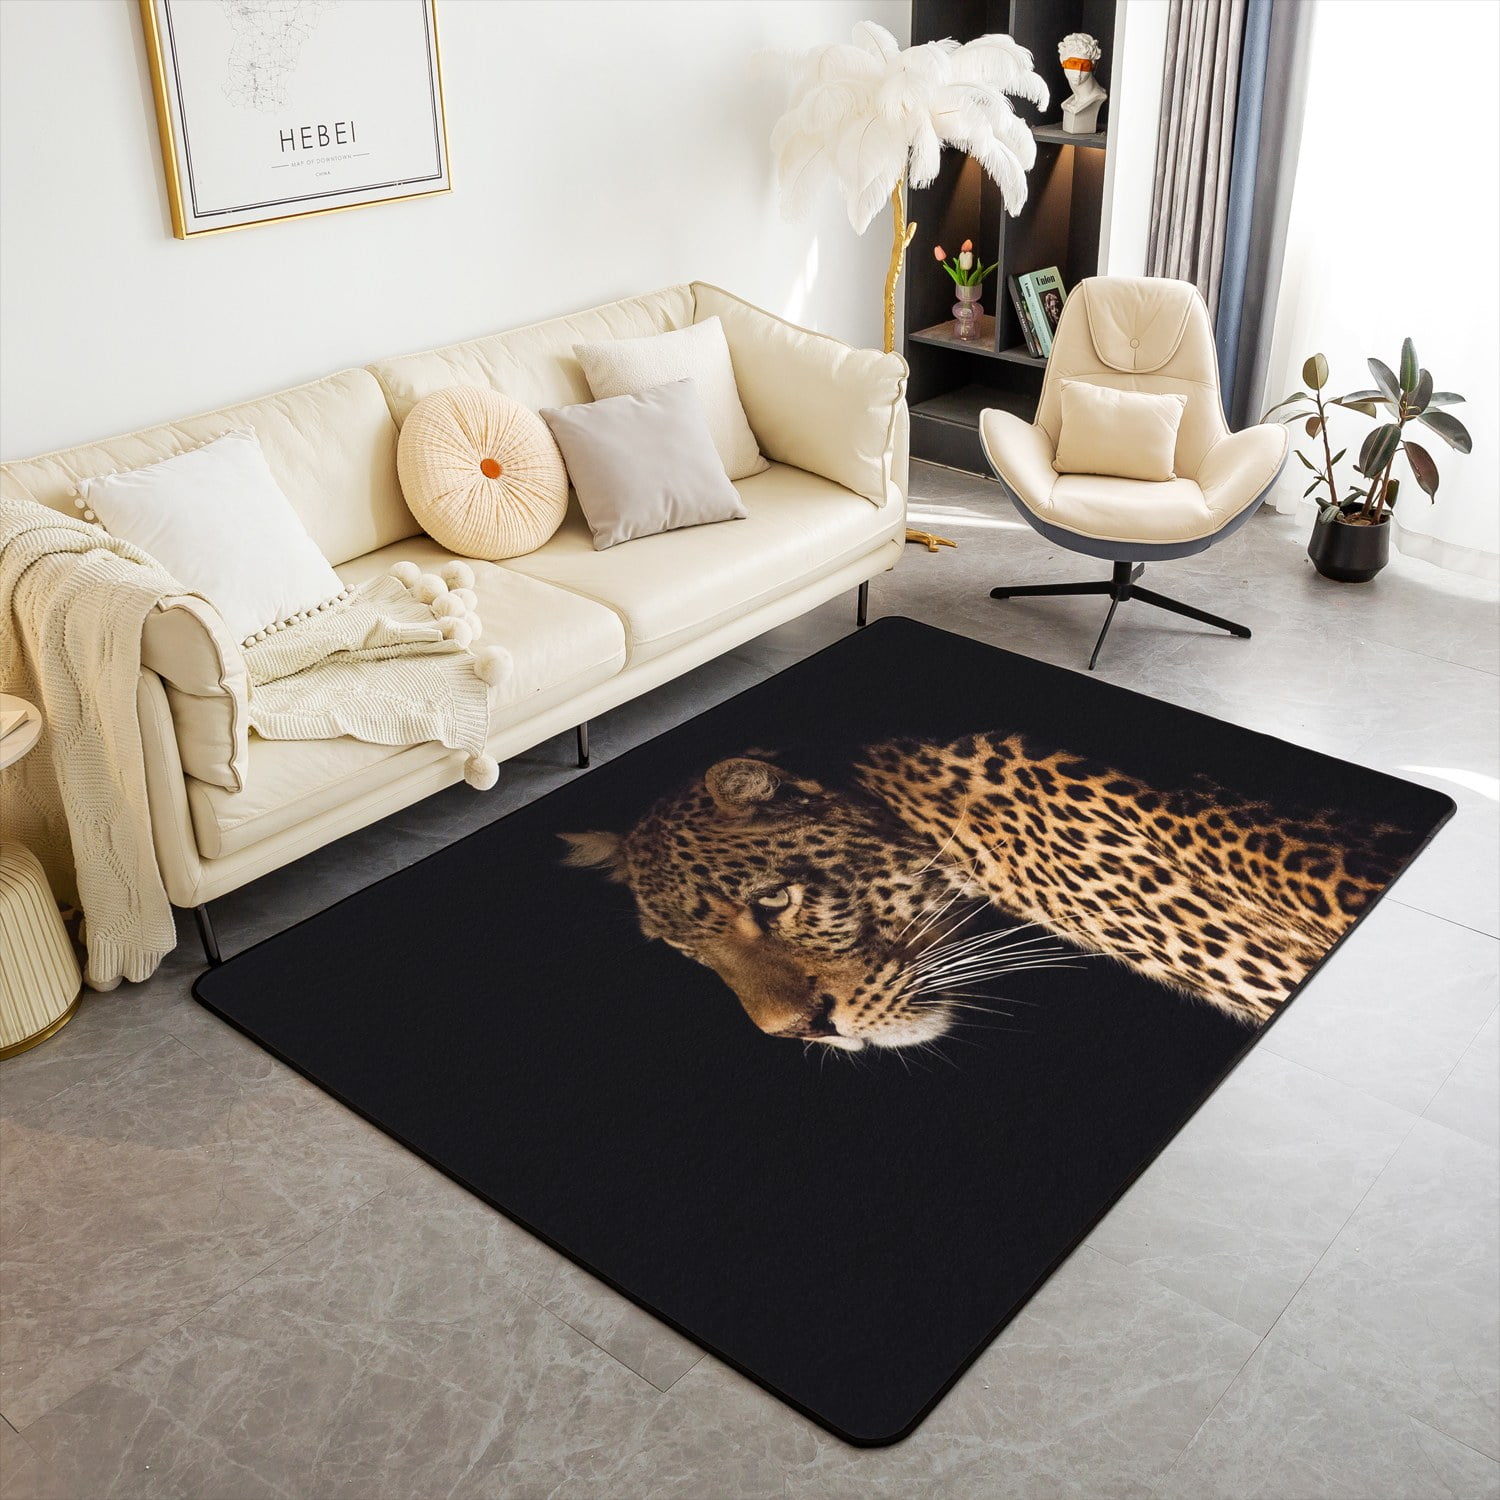 YST Tiger Area Rug 5x7 for Bedside,3D Animal Print Indoor Floor 